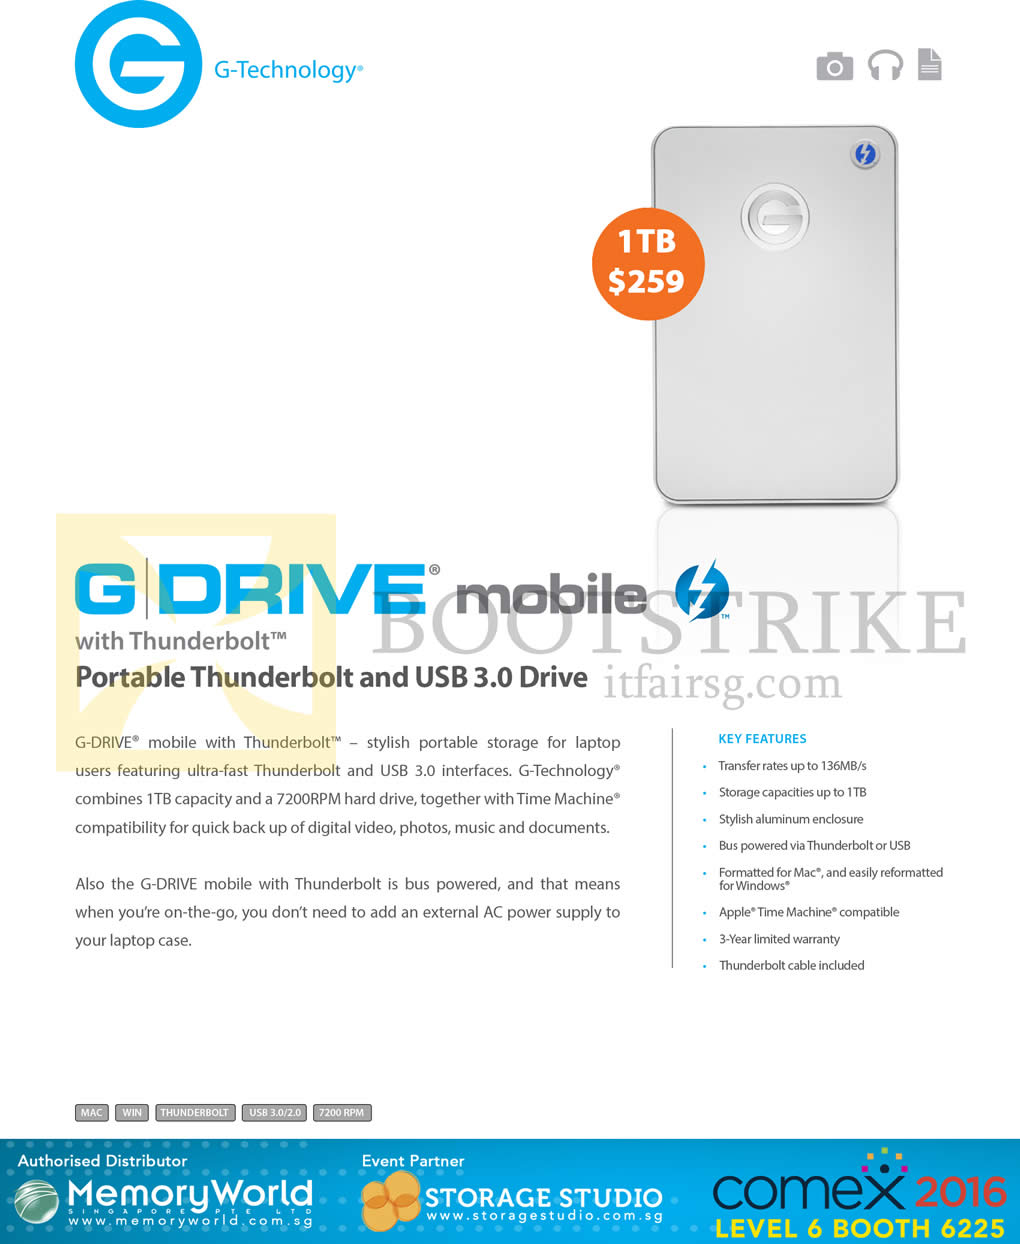 COMEX 2016 price list image brochure of Memory World G-Technology G Drive External Drive 1TB Thunderbolt USB